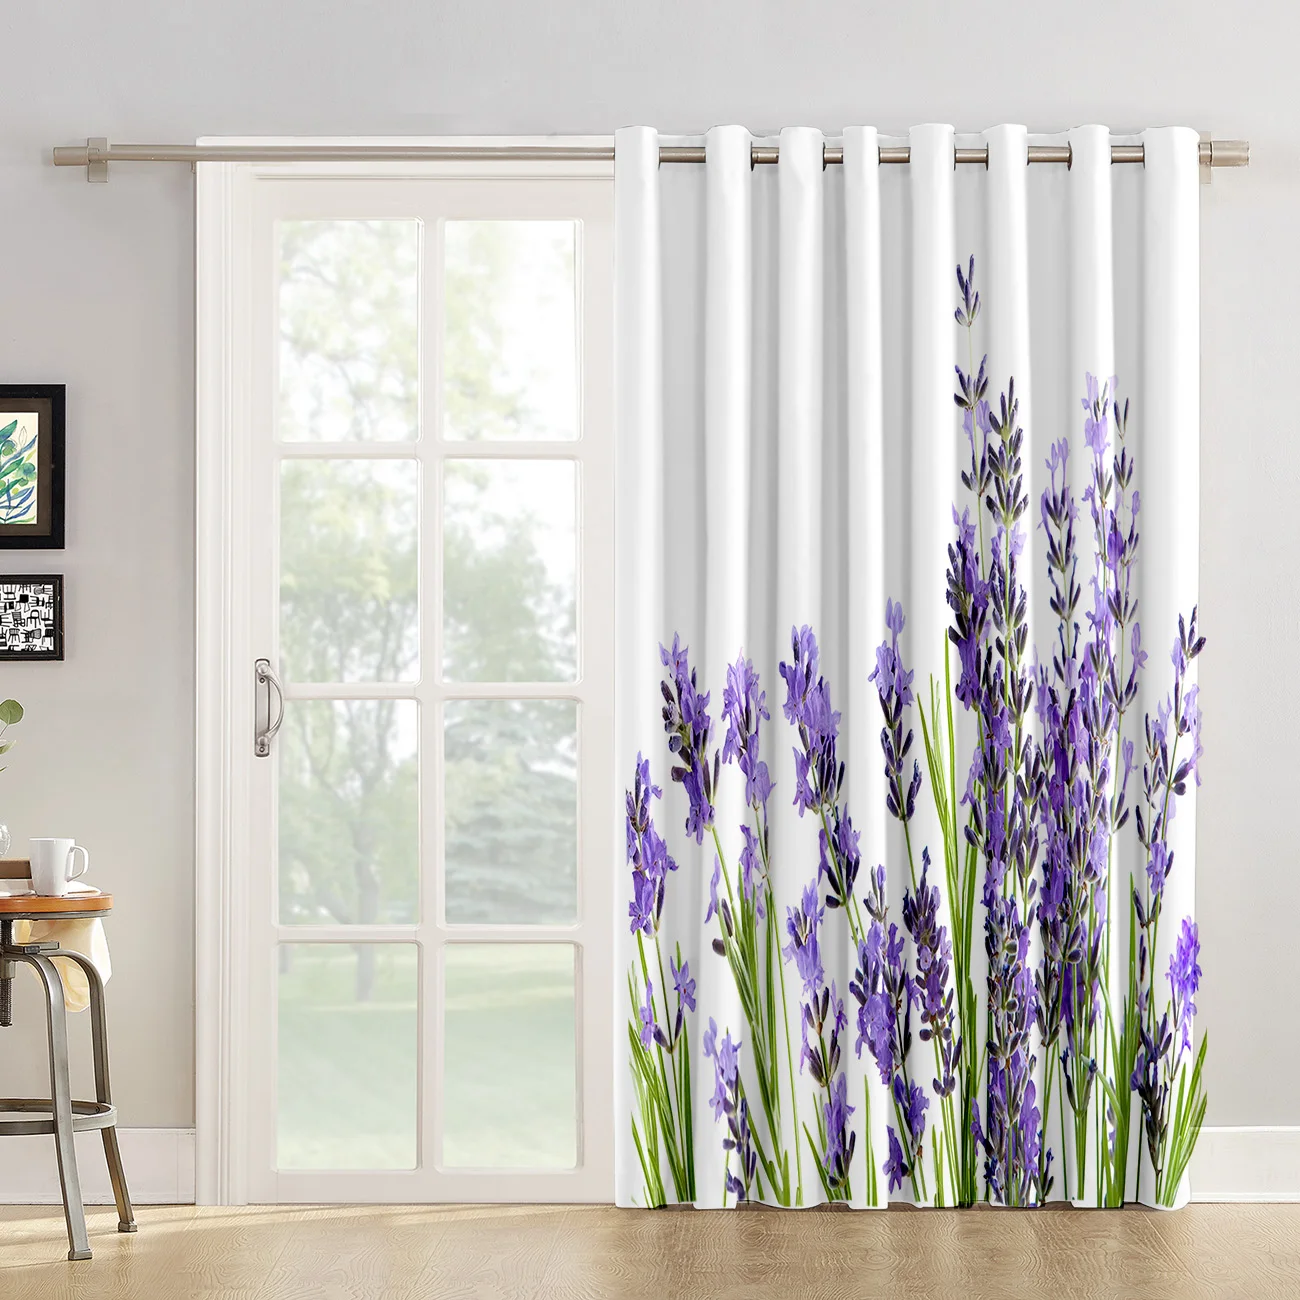 Purple Lavender Window Treatments Curtains Valance Window Curtains Dark Decor Bedroom Indoor Fabric Decor Kids Window Curtain